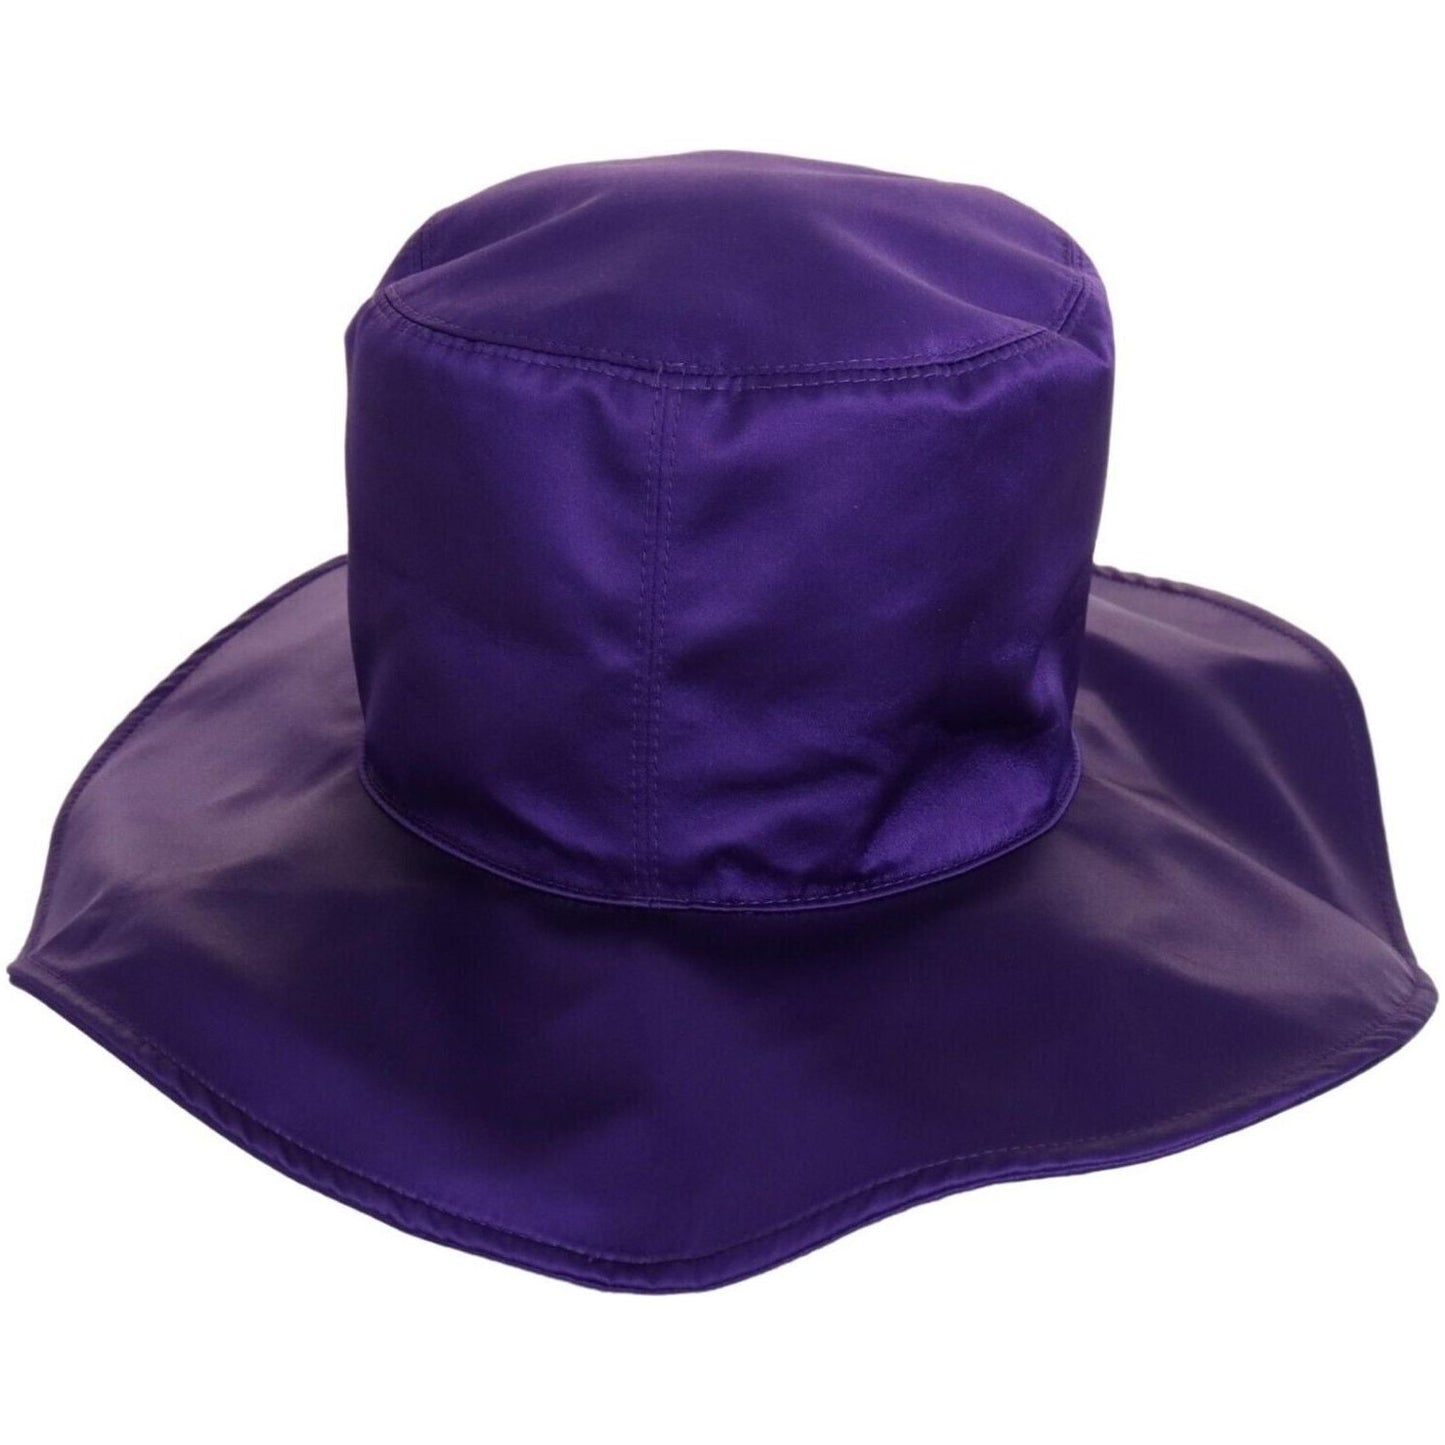 Dolce & Gabbana Elegant Purple Silk Top Hat purple-silk-stretch-top-hat s-l1600-74-3-39acdd82-ad5.jpg